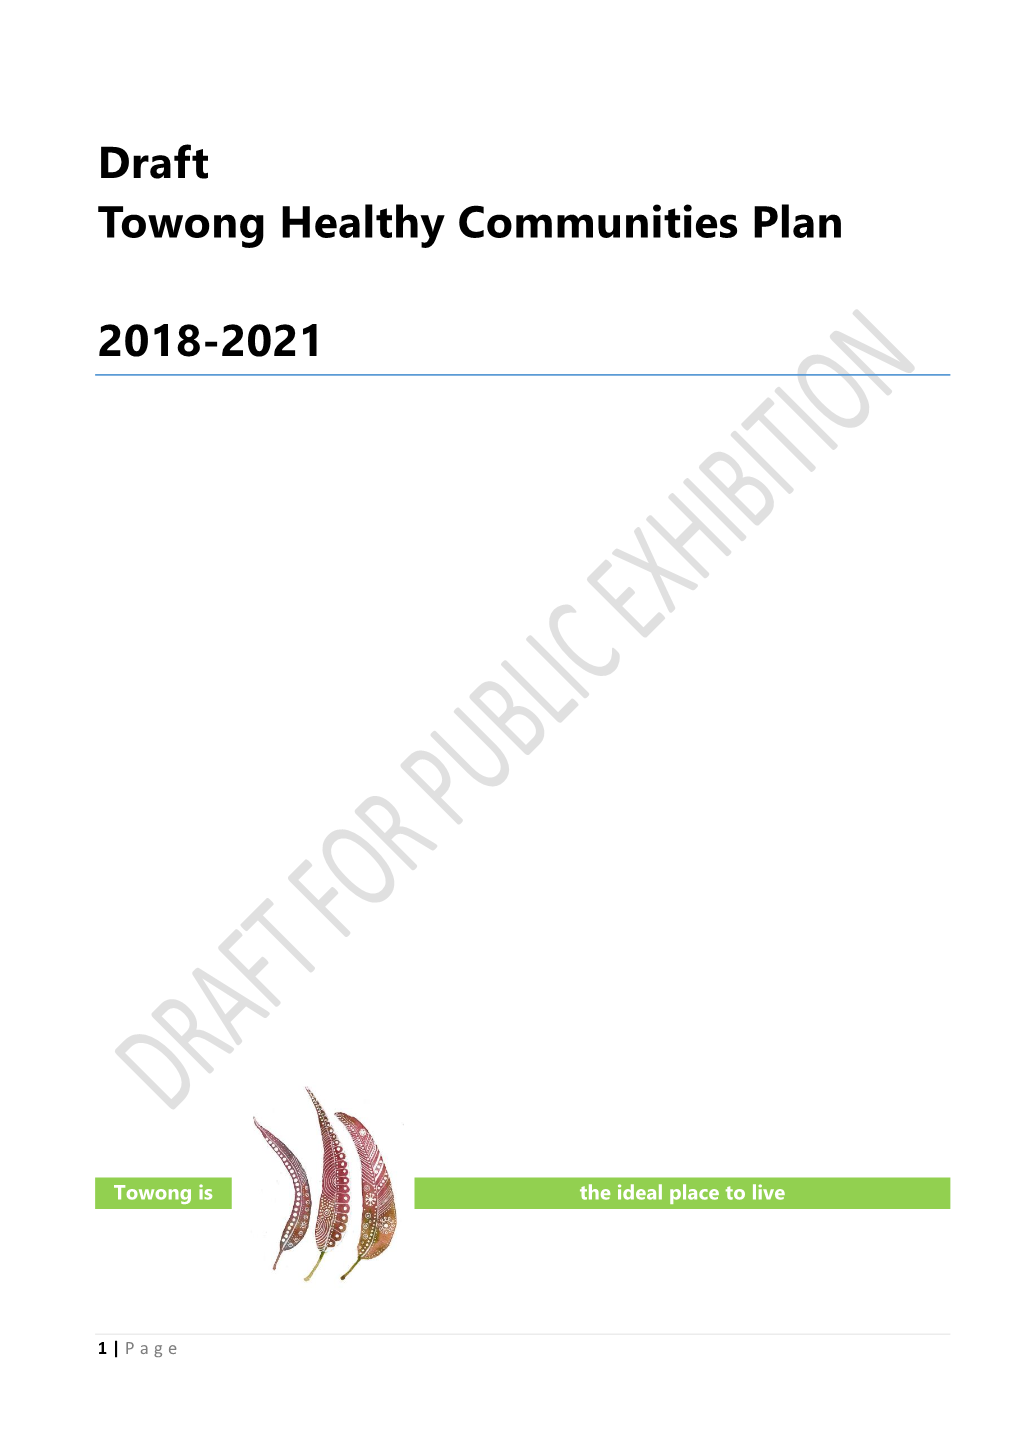 Draft Towong Healthy Communities Plan 2018-2021